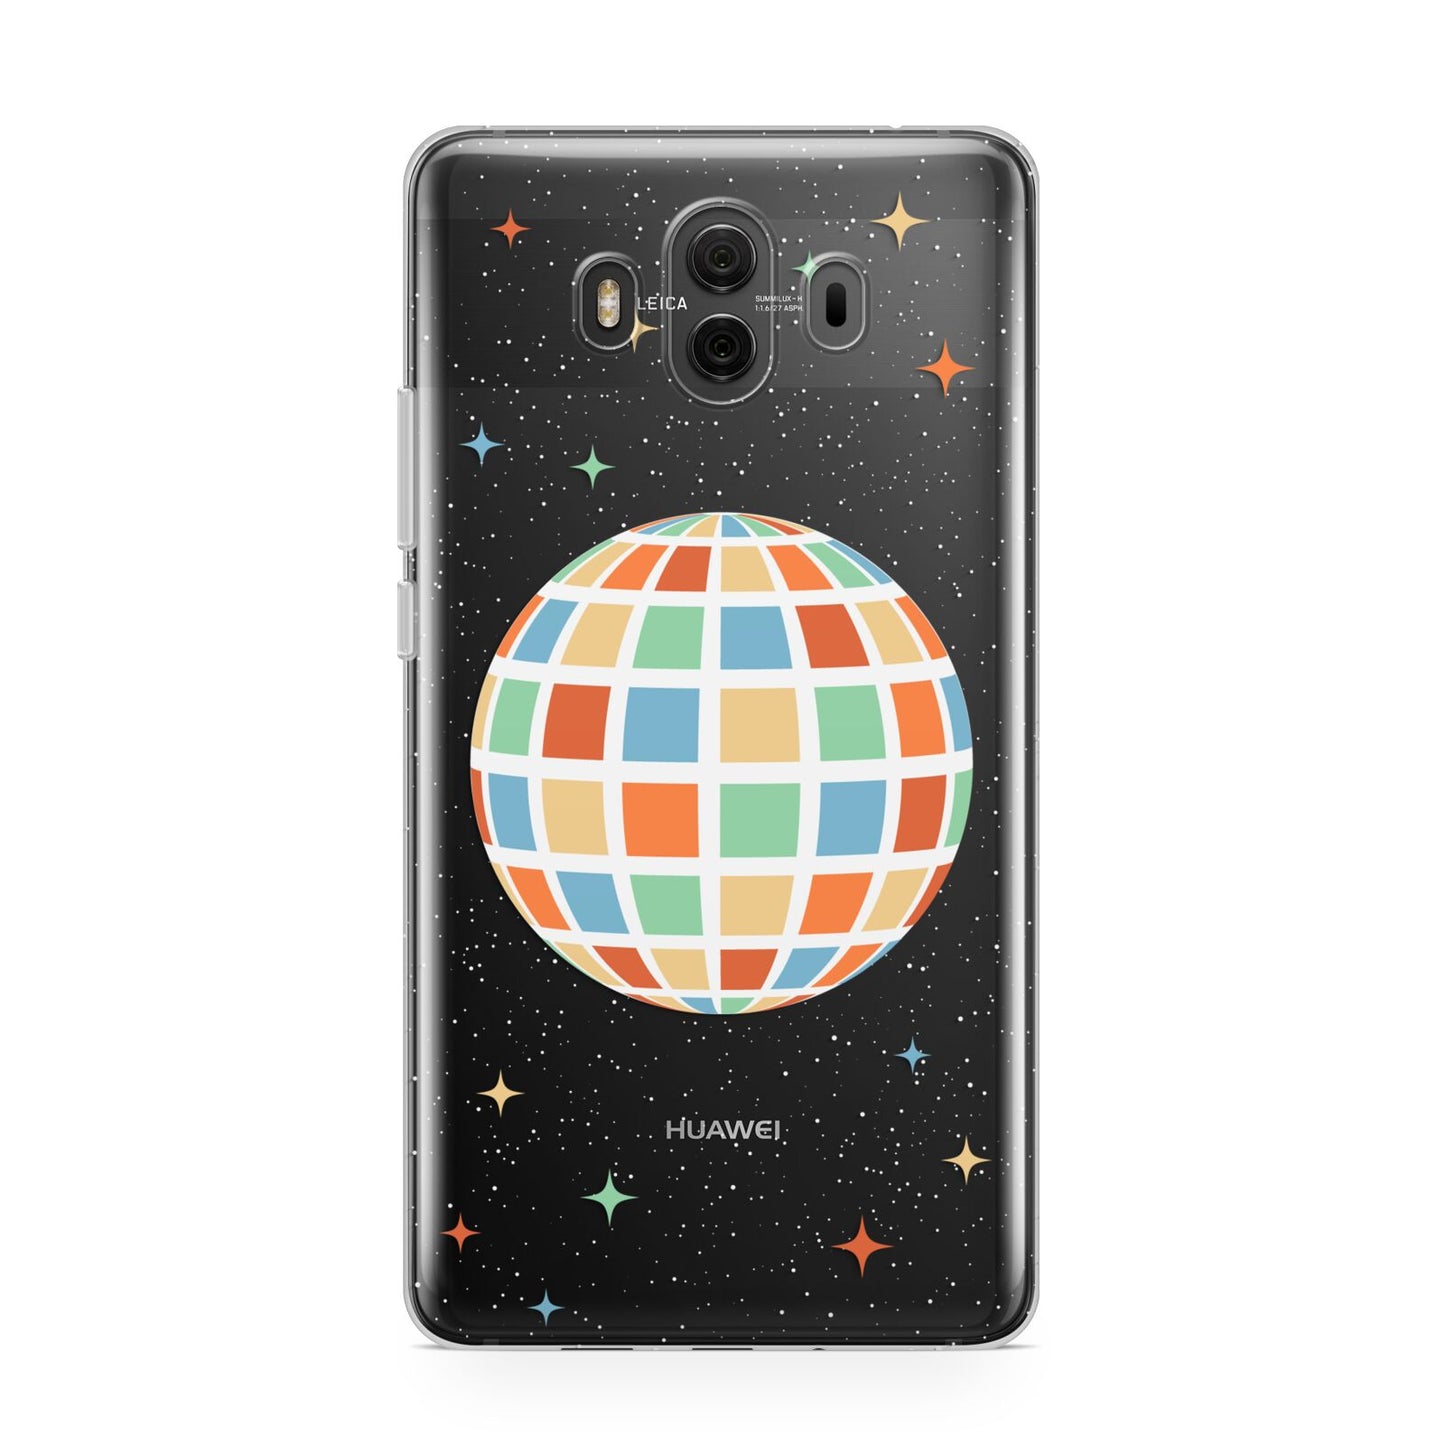 Disco Ball Huawei Mate 10 Protective Phone Case